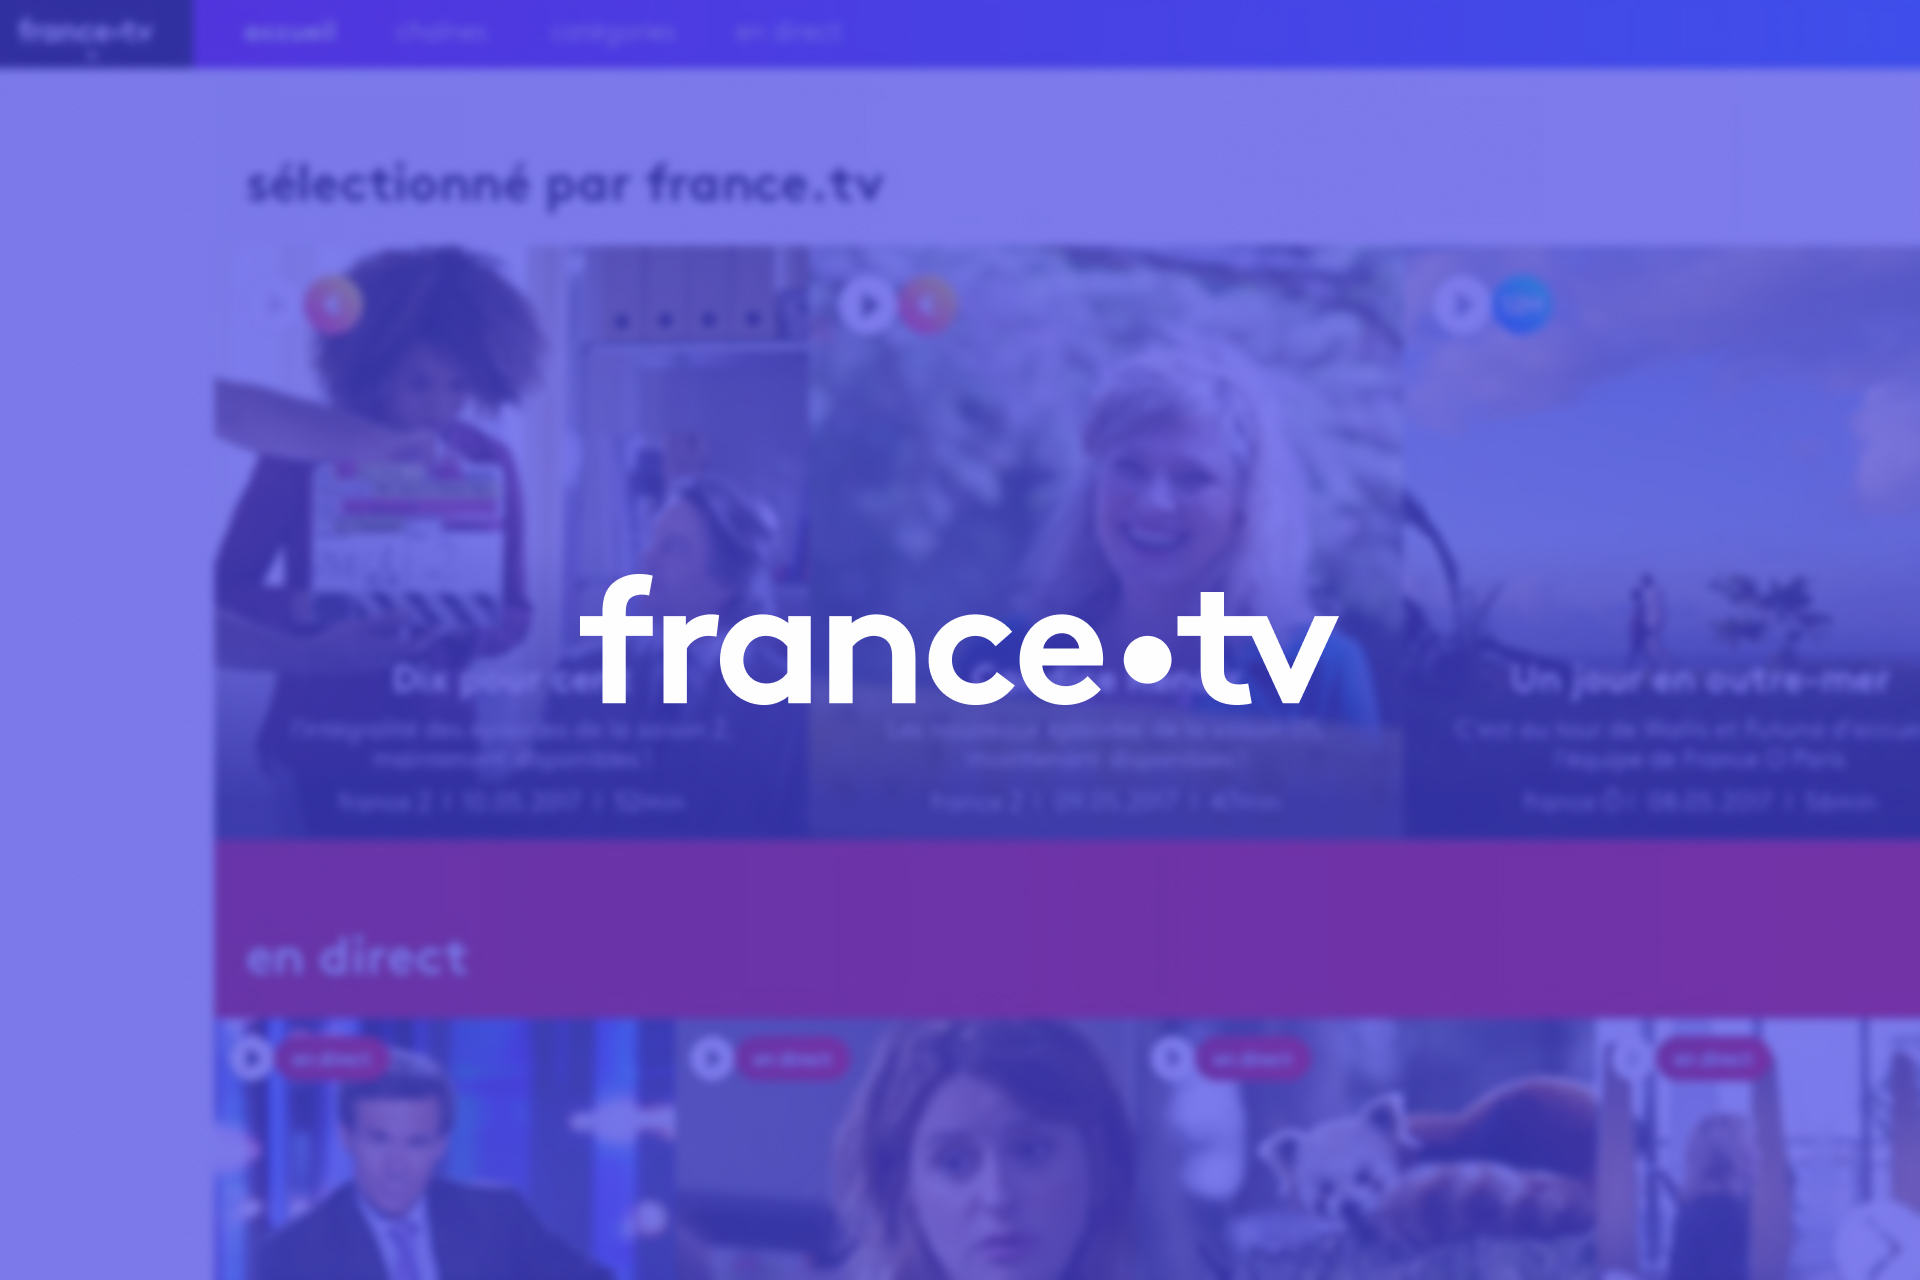 Projet France.tv